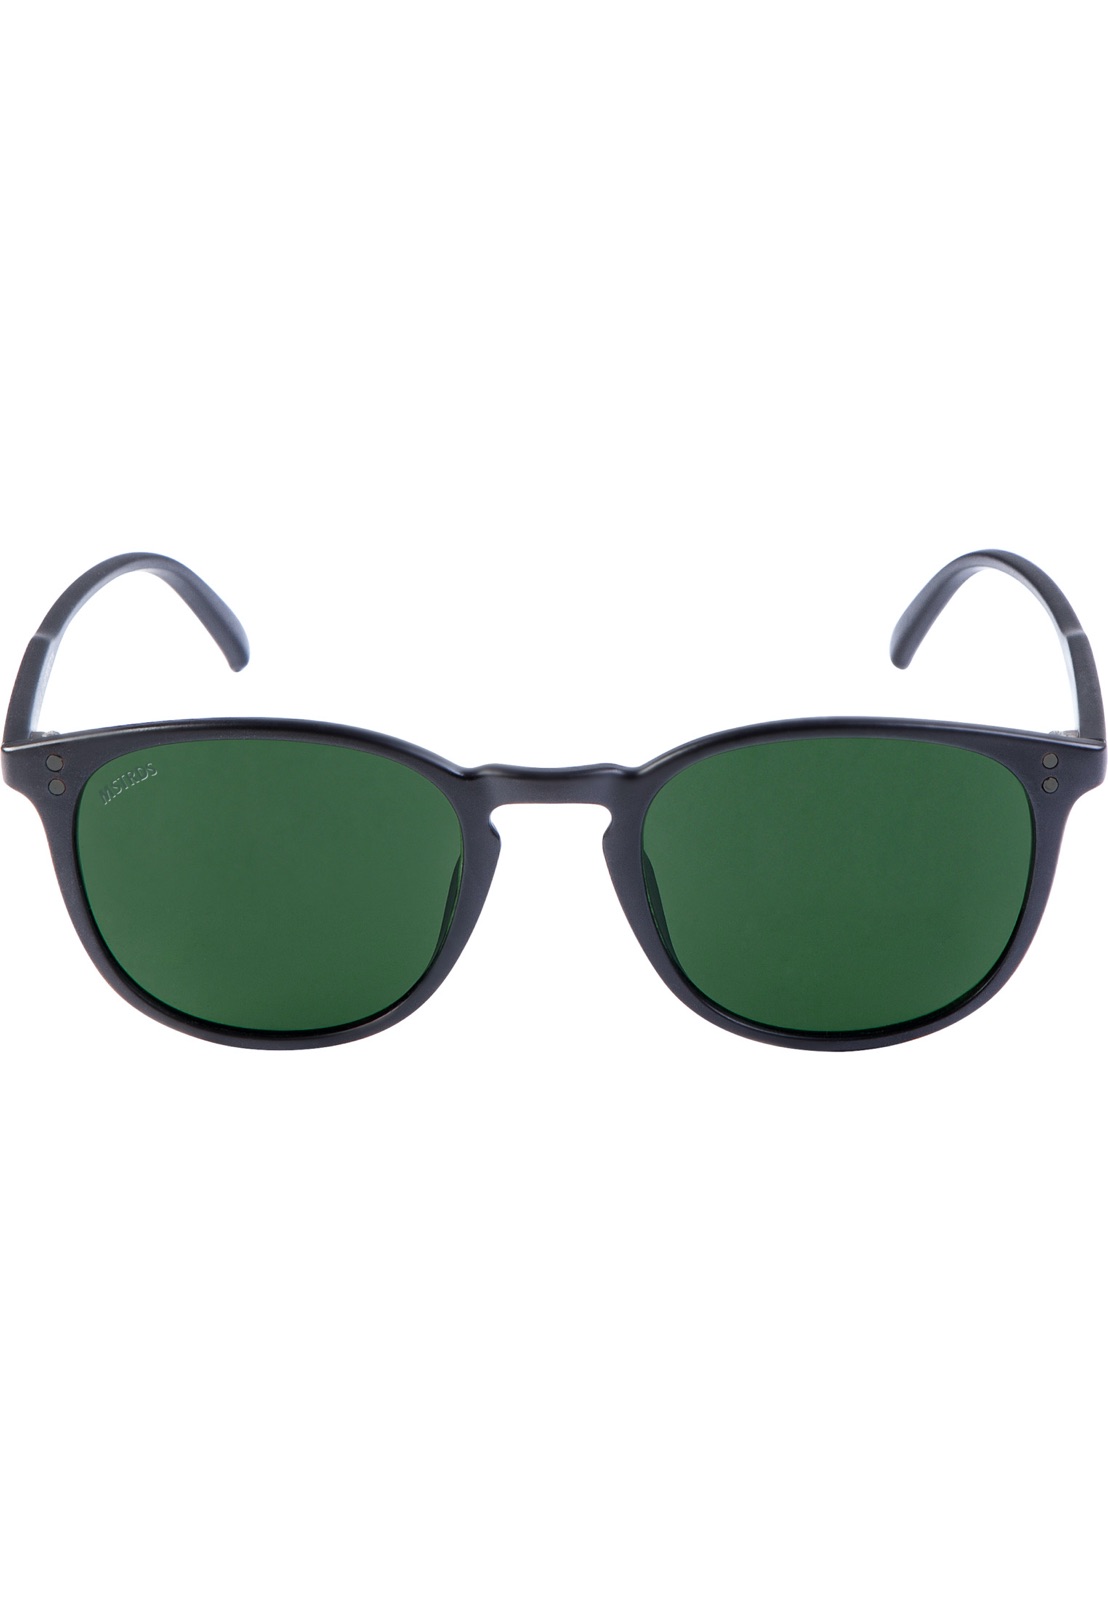 Sunglasses Arthur - Turtex GmbH | Sonnenbrillen